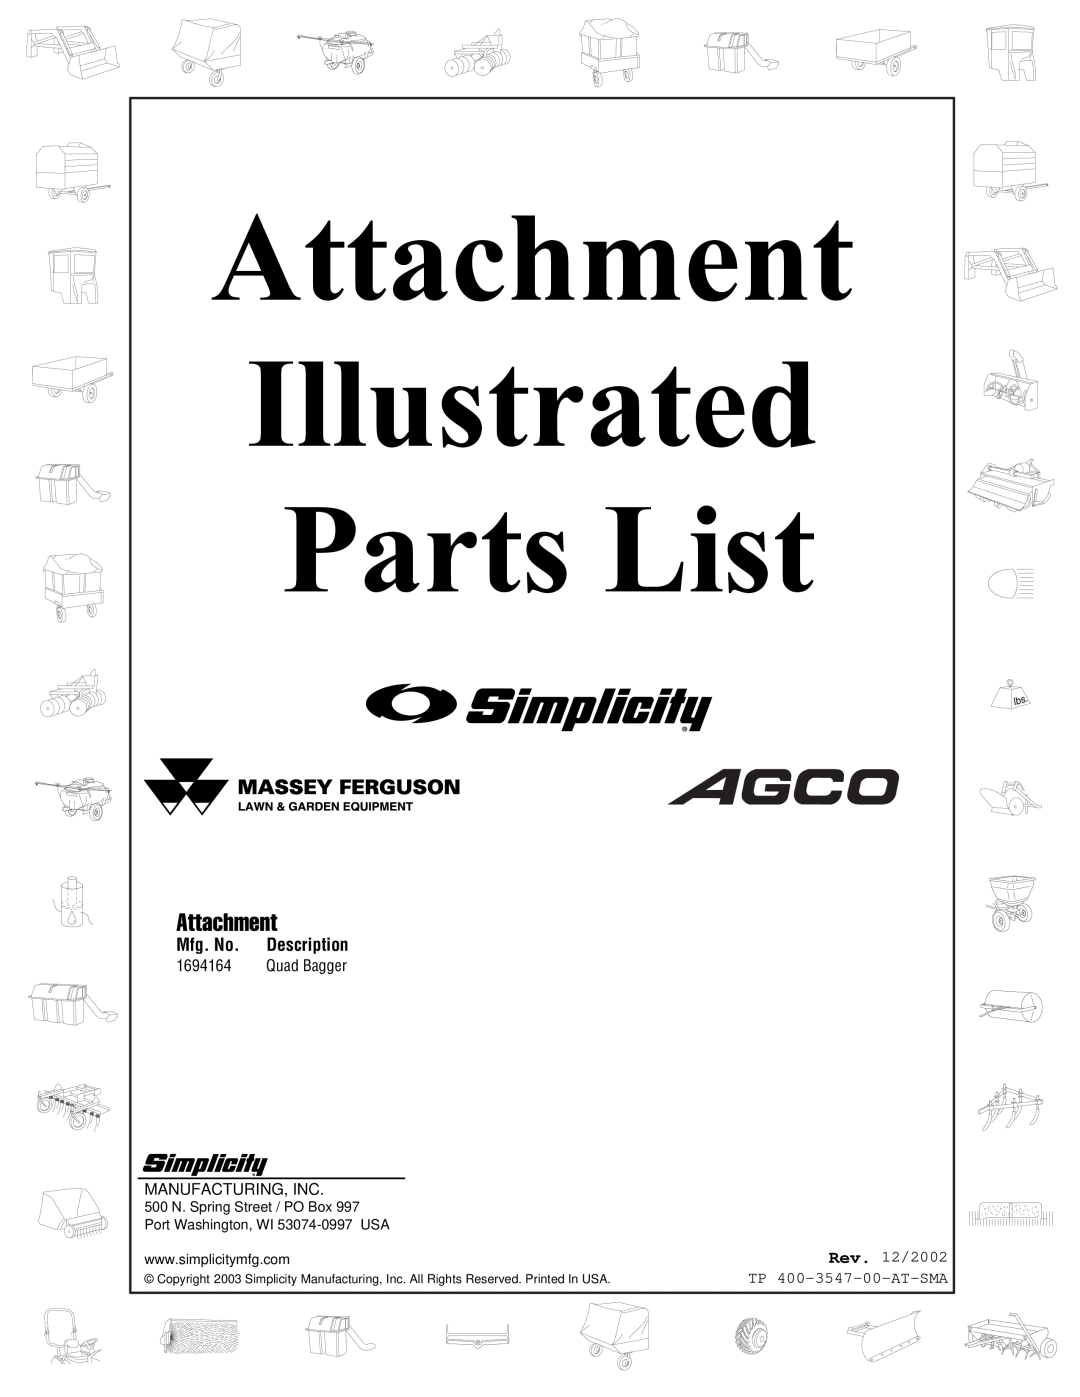 Snapper manual Mfg. No. Description, Rev. 12/2002, TP 400-3547-00-AT-SMA, Attachment Illustrated Parts List 